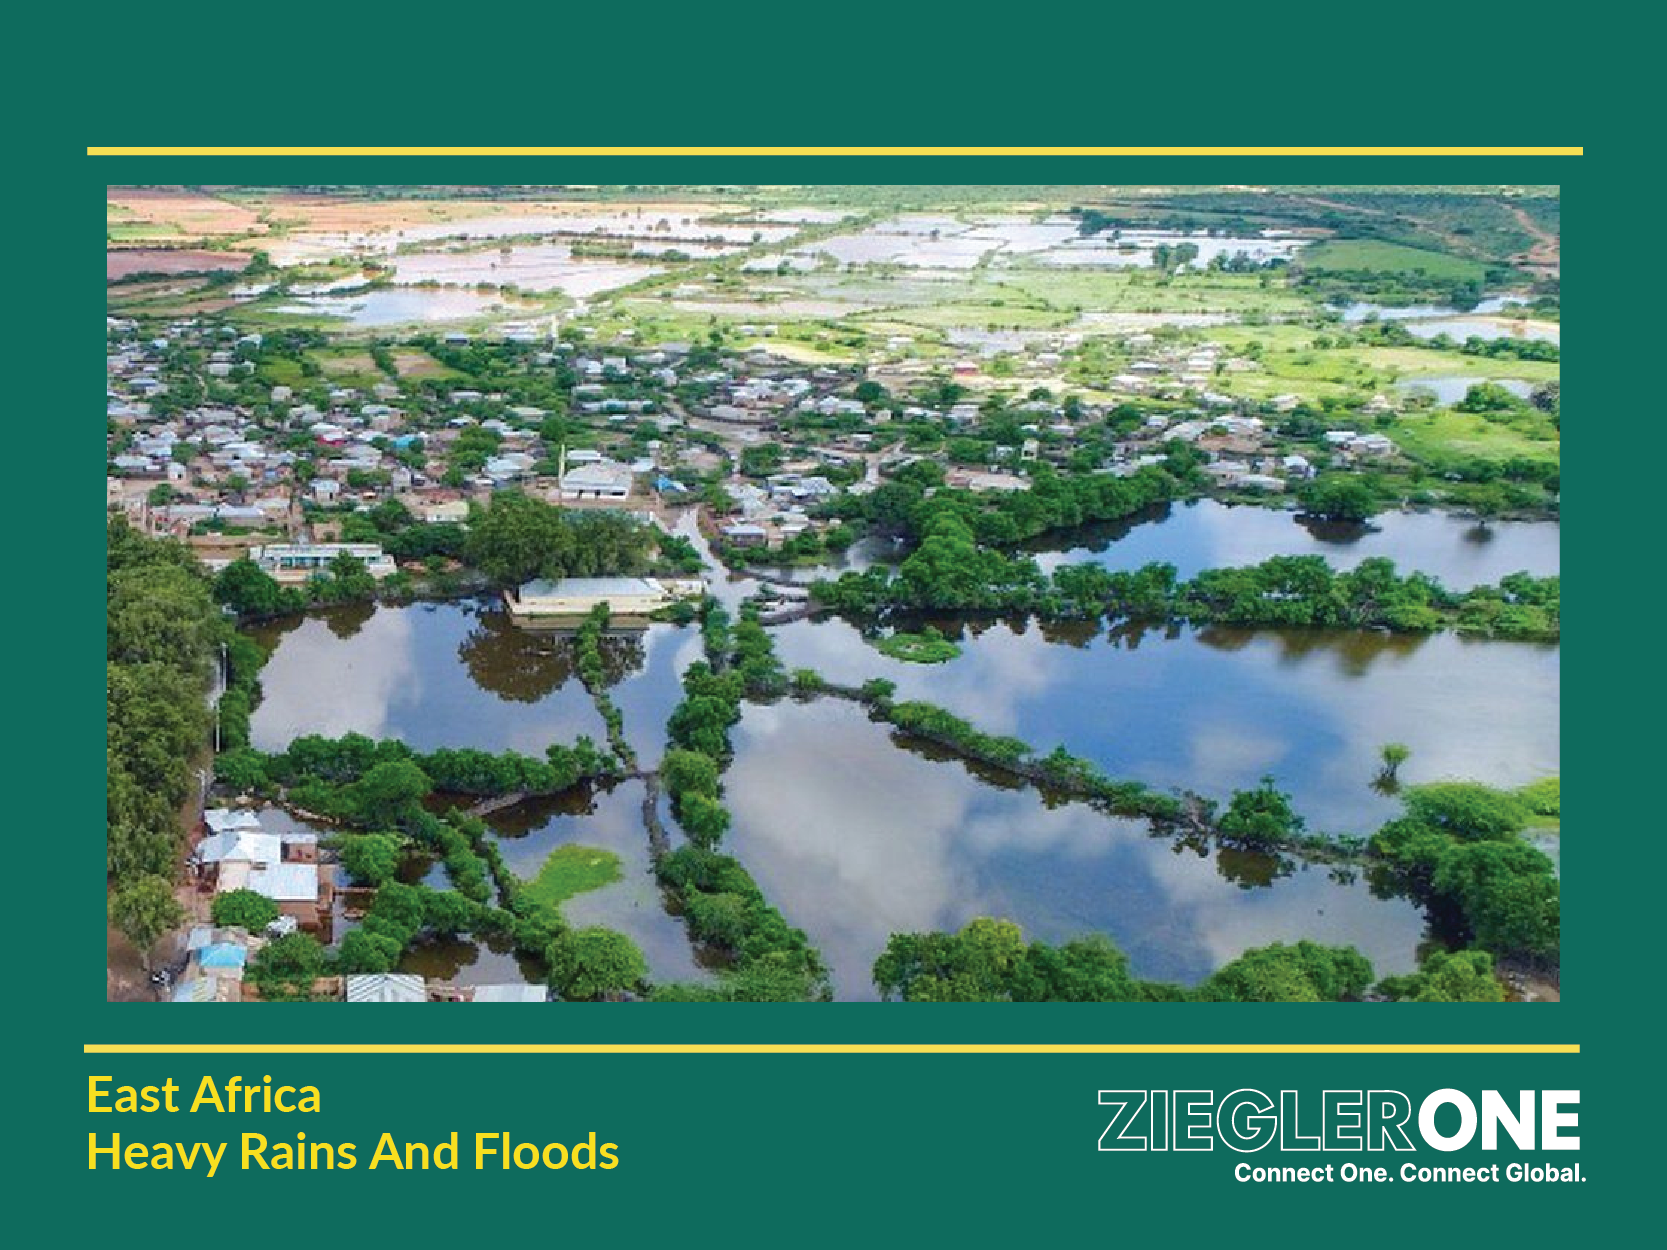 East Africa – Devastating Heavy Rains and Floods